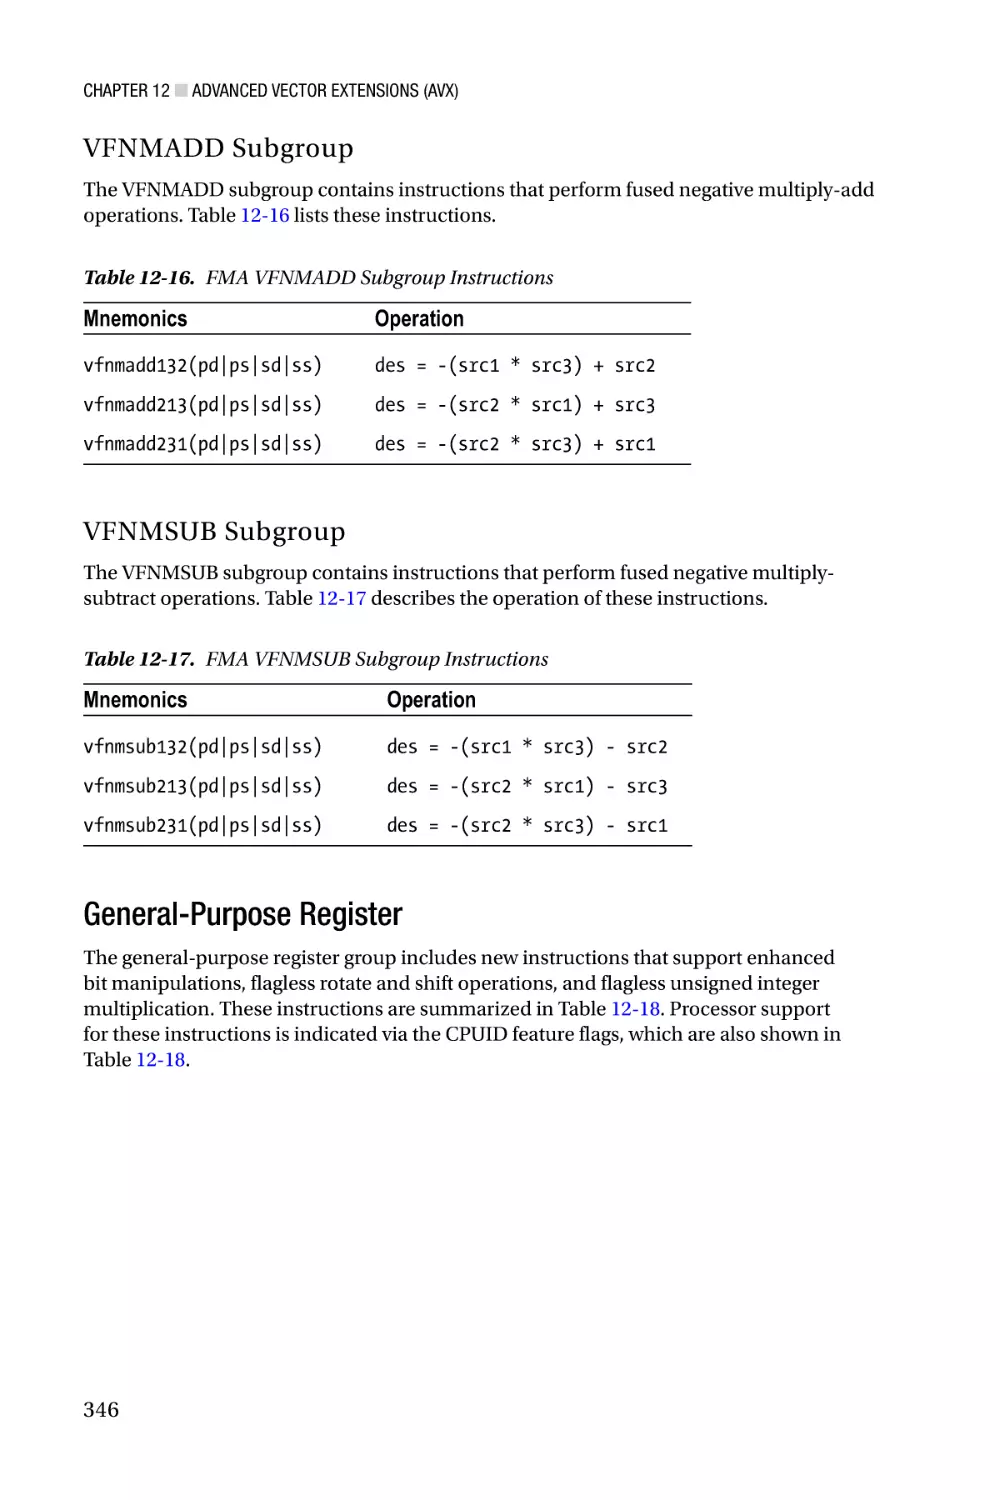 VFNMADD Subgroup
VFNMSUB Subgroup
General-Purpose Register